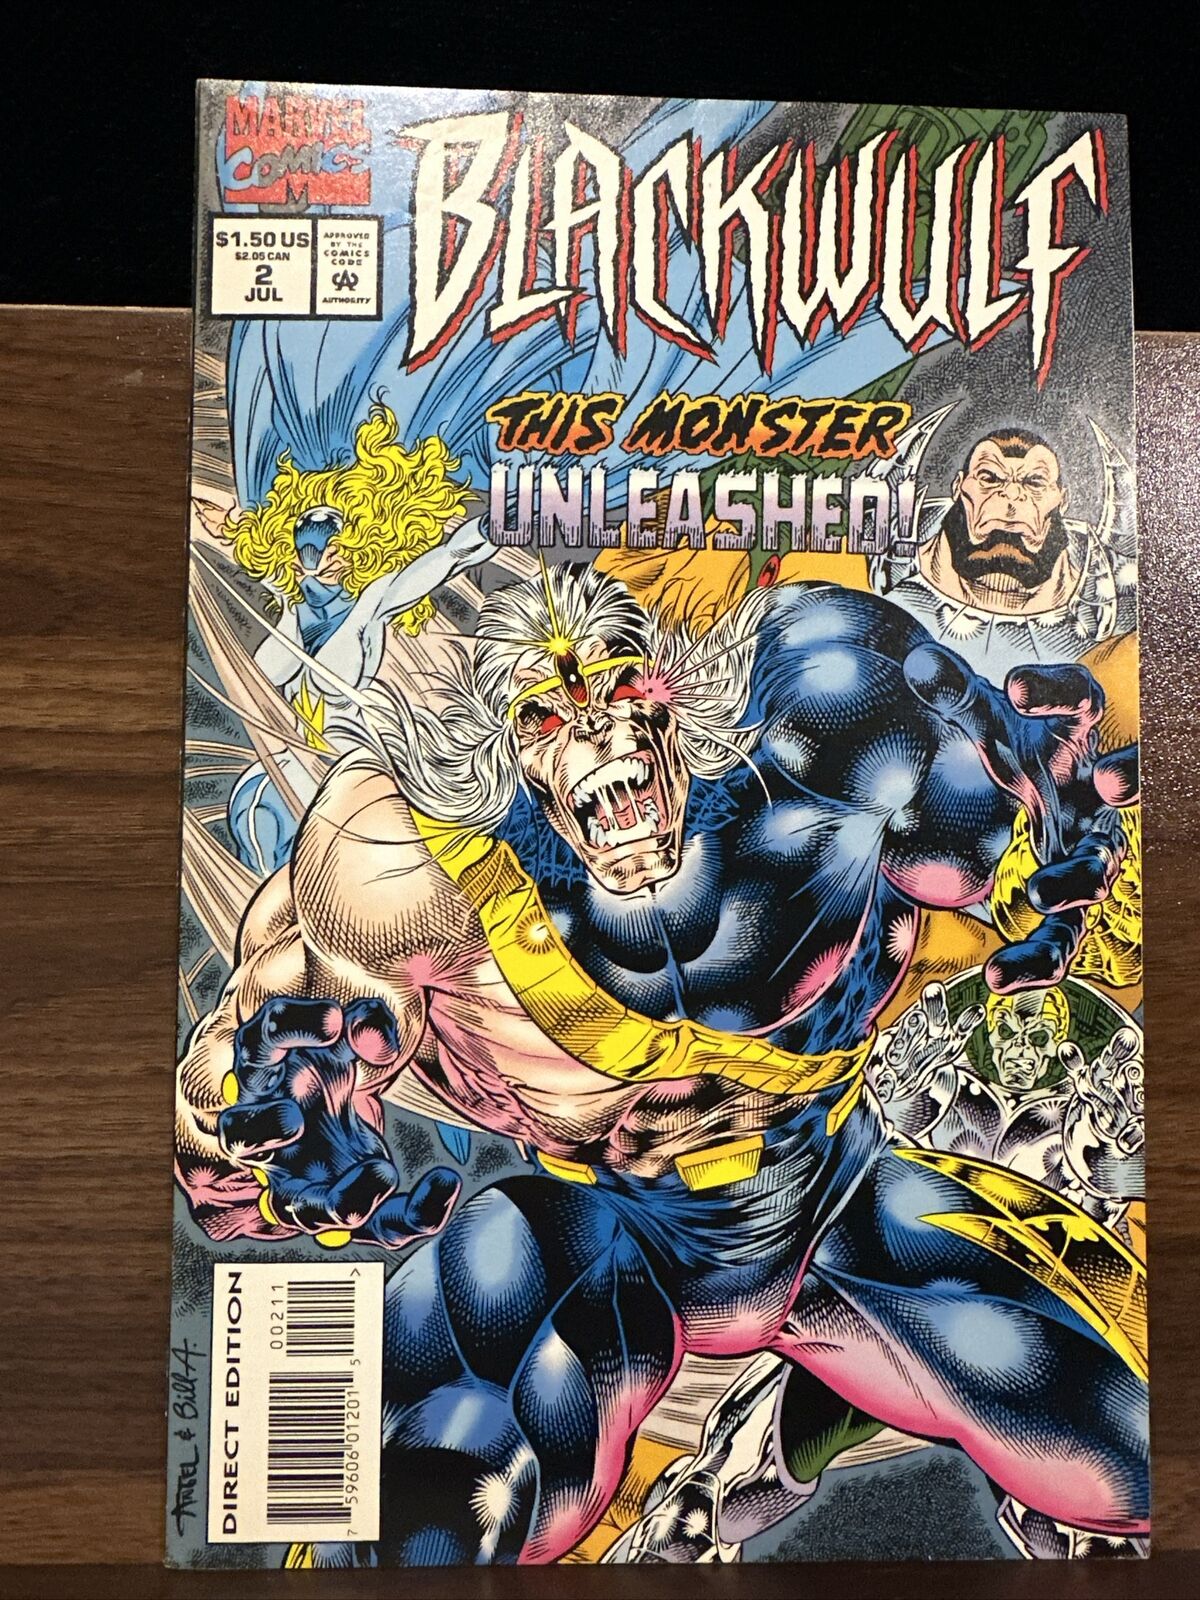 Blackwulf #2 July 1994 Marvel Comics